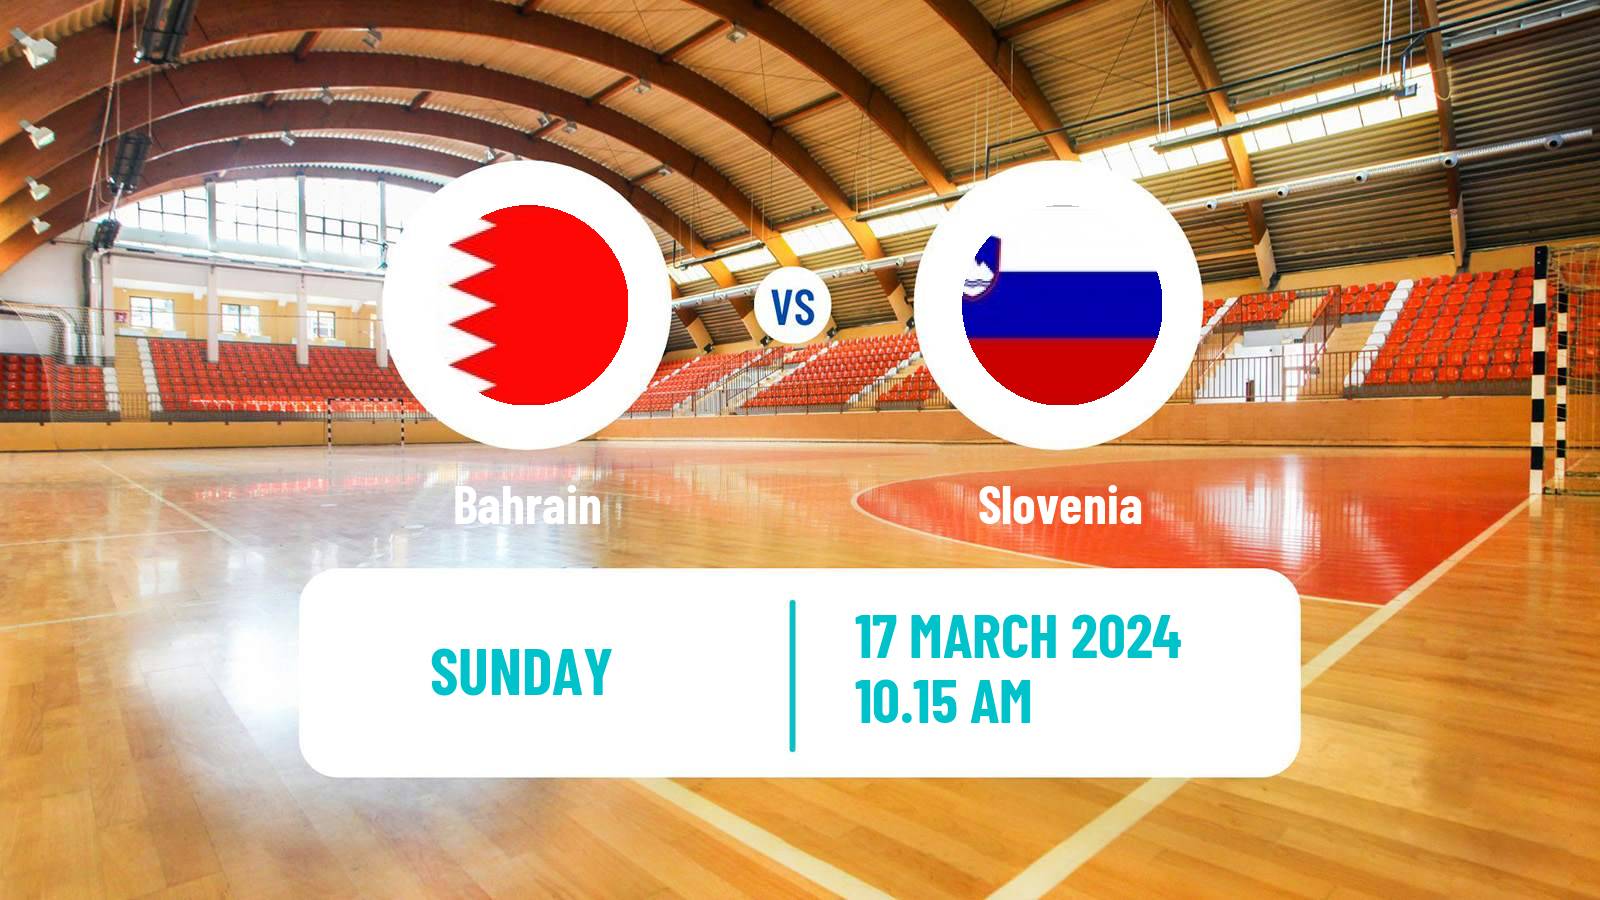 Handball Olympic Games - Handball Bahrain - Slovenia